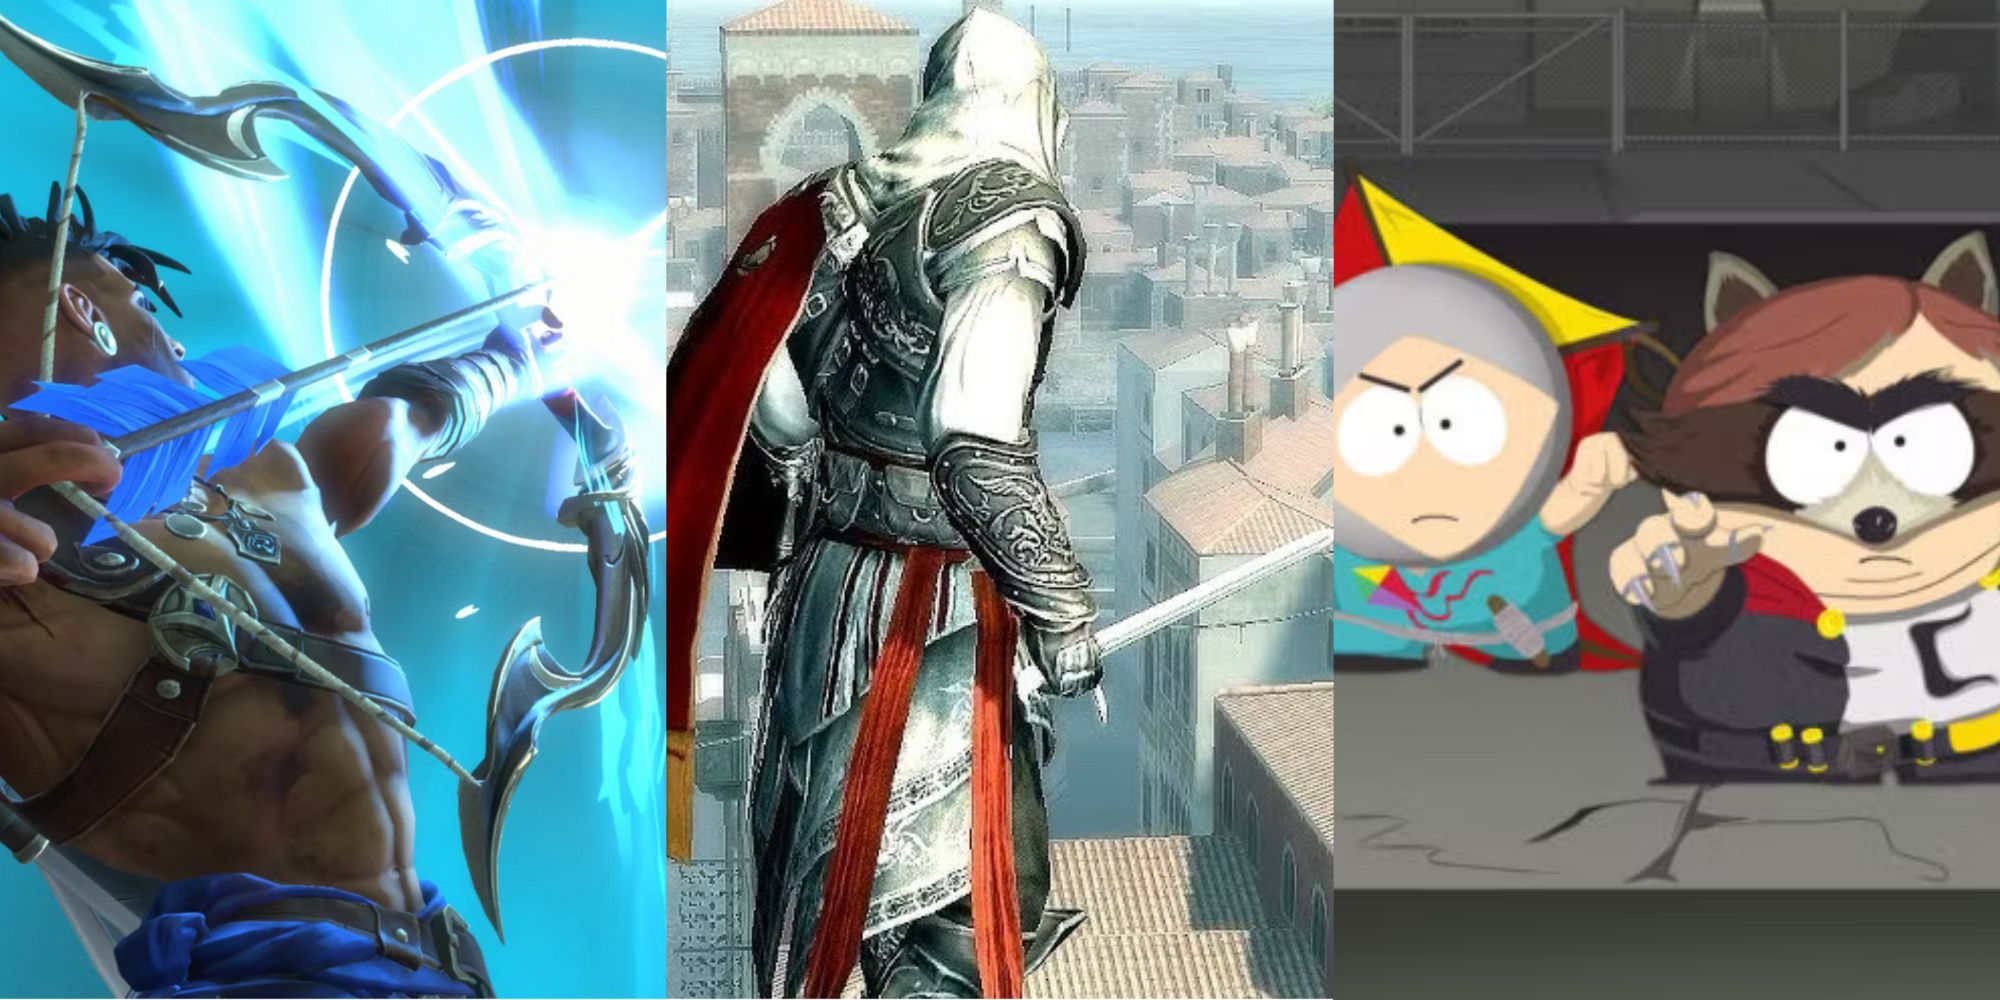 Sargon Firing Glowing Blue Arrow, Ezio On Rooftops, Kyle And Cartman As Superheroes